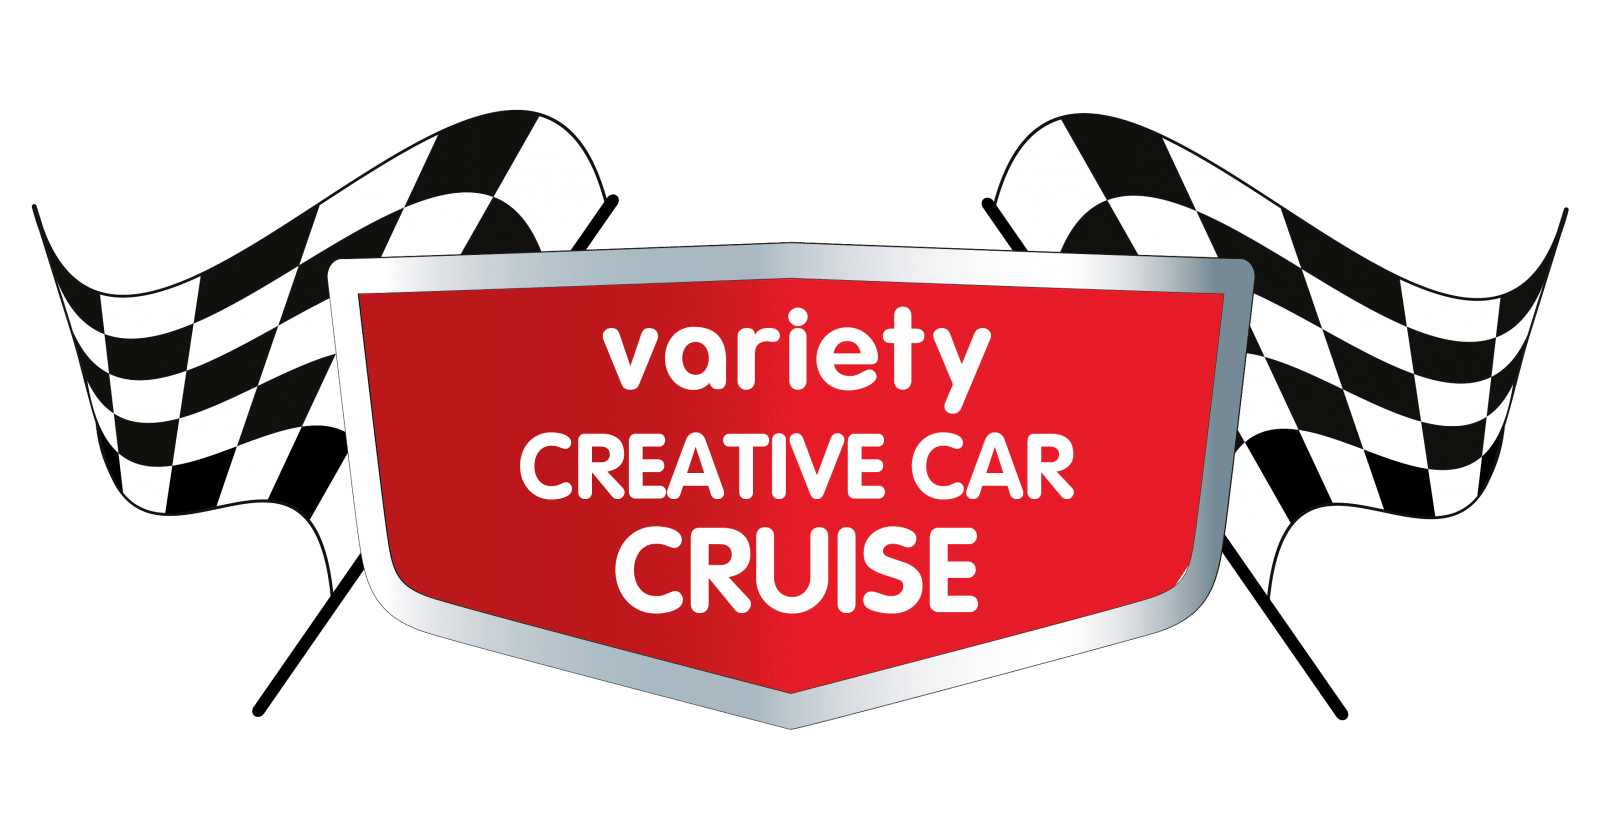 cruise cars logo